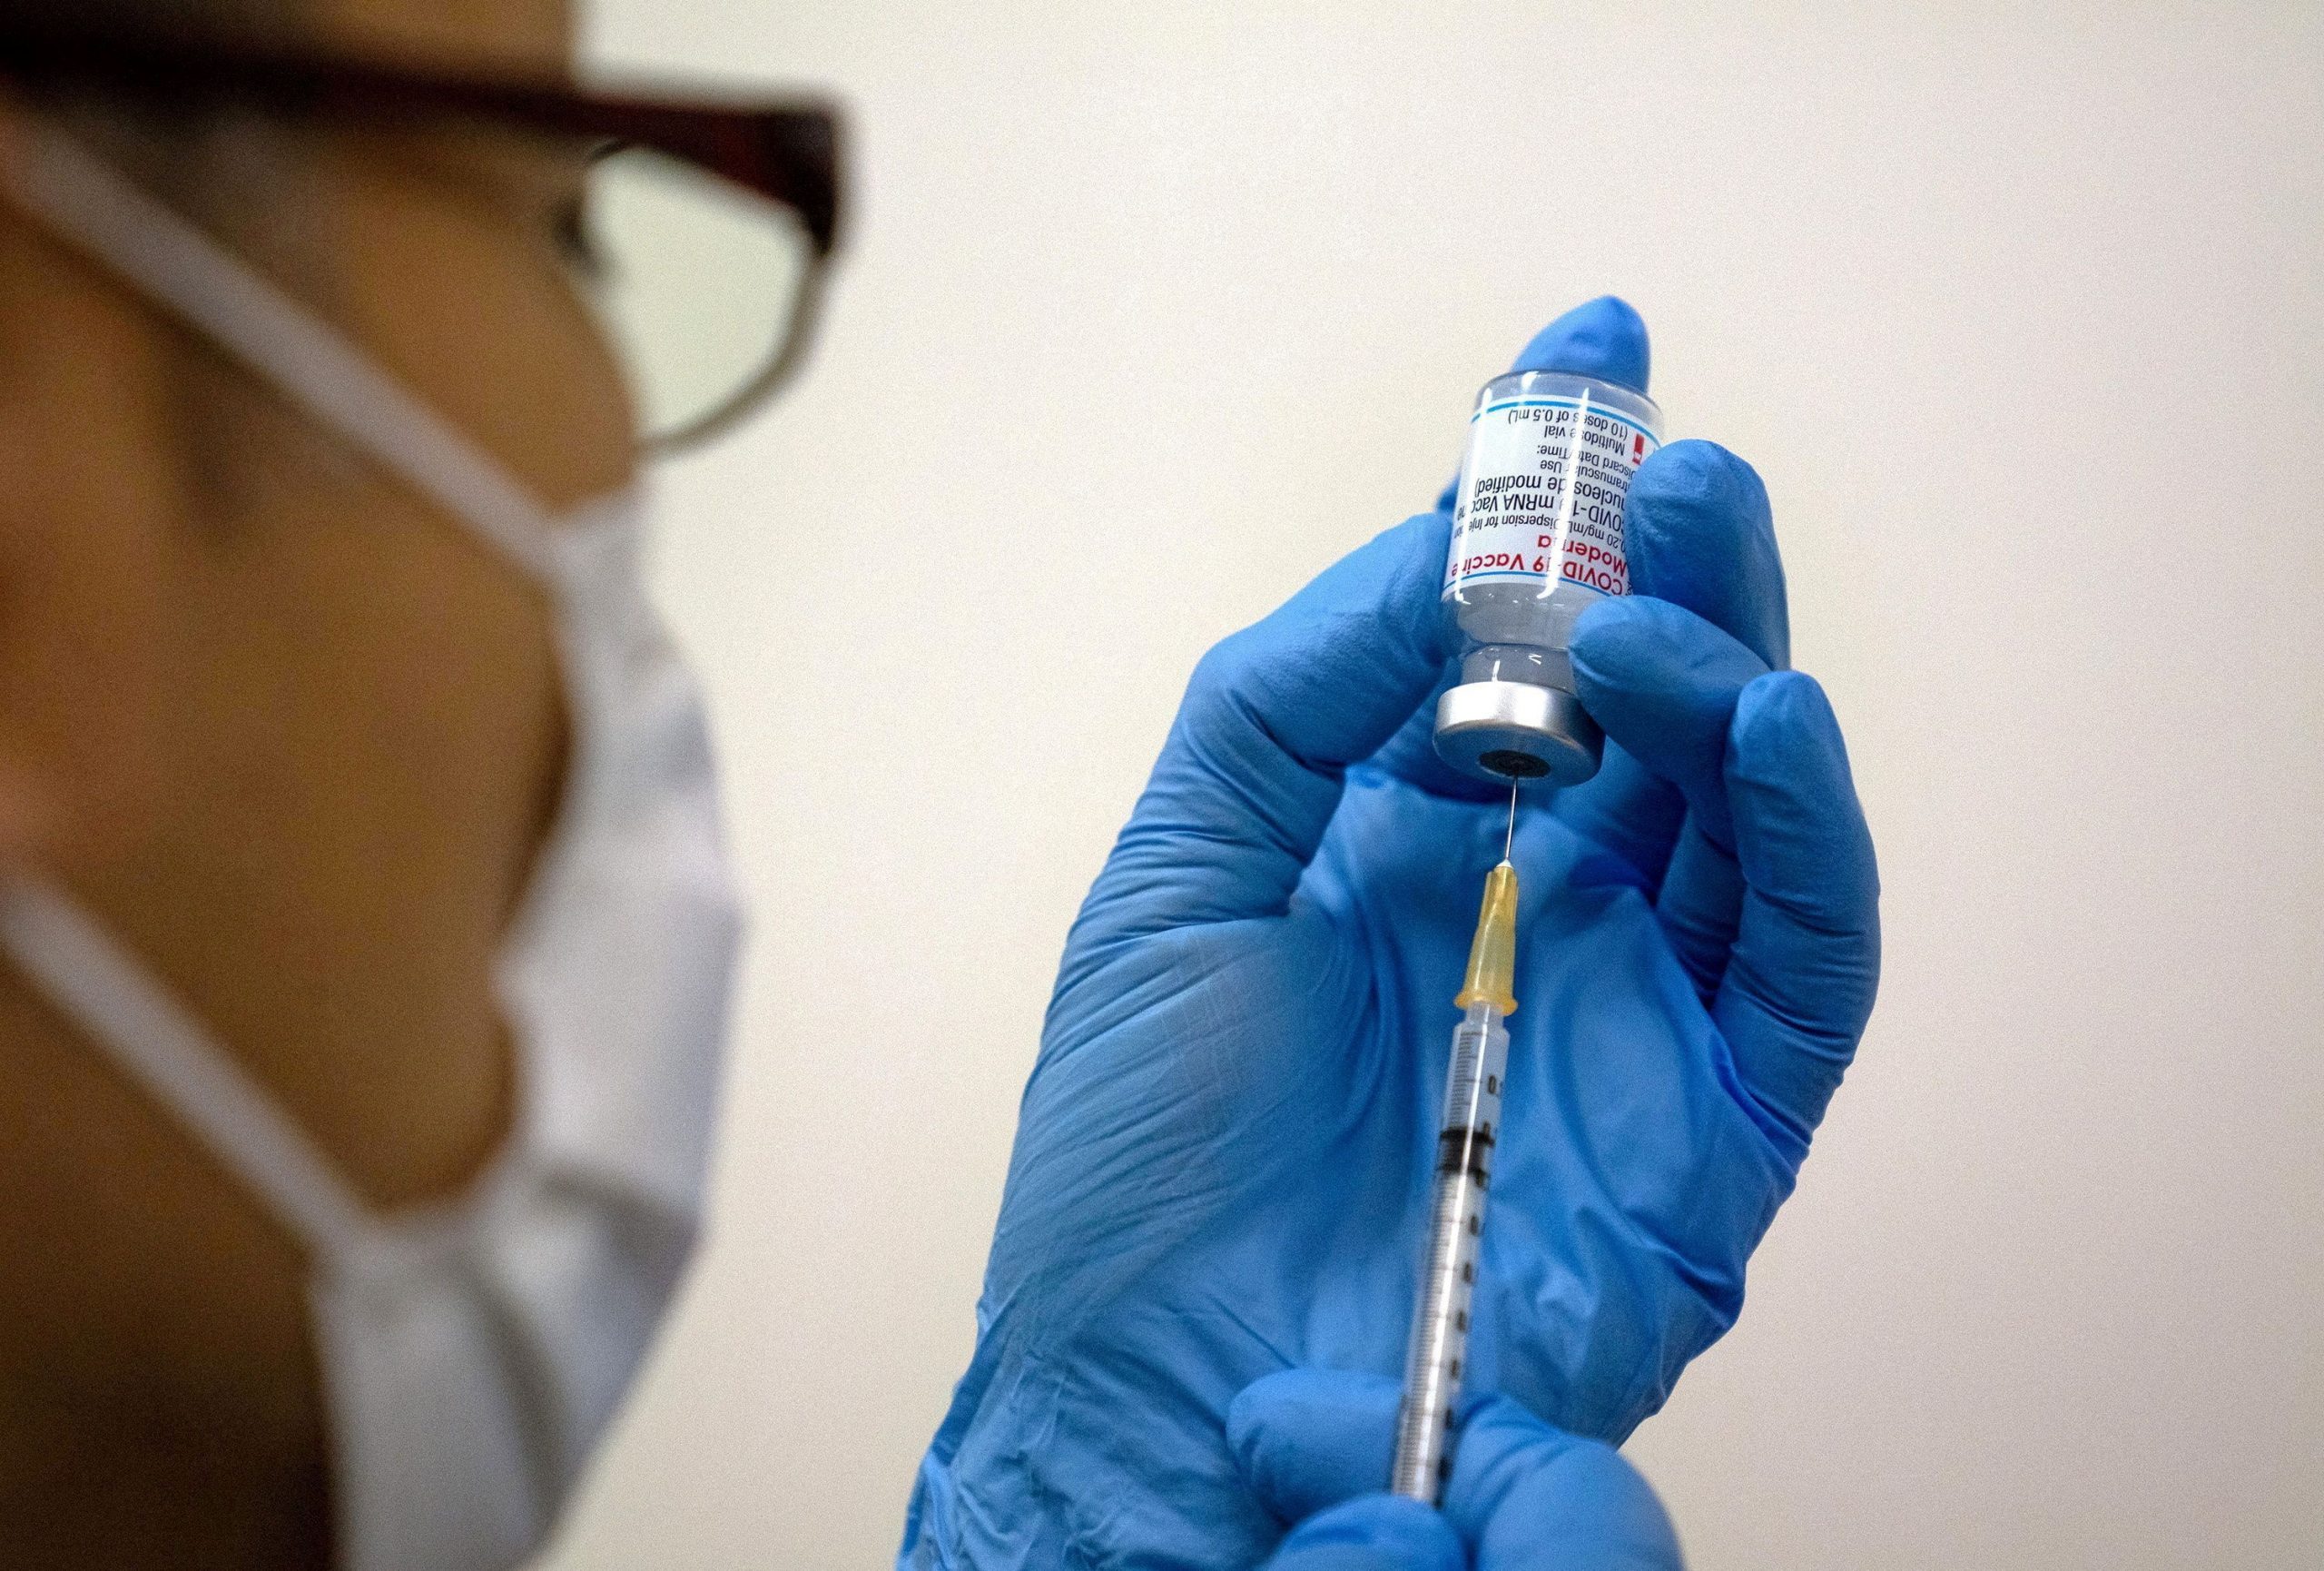 Covid-19: Μεγάλο άλμα στις μετοχές εταιριών εμβολίων εν μέσω εξάπλωσης νέων παραλλαγών